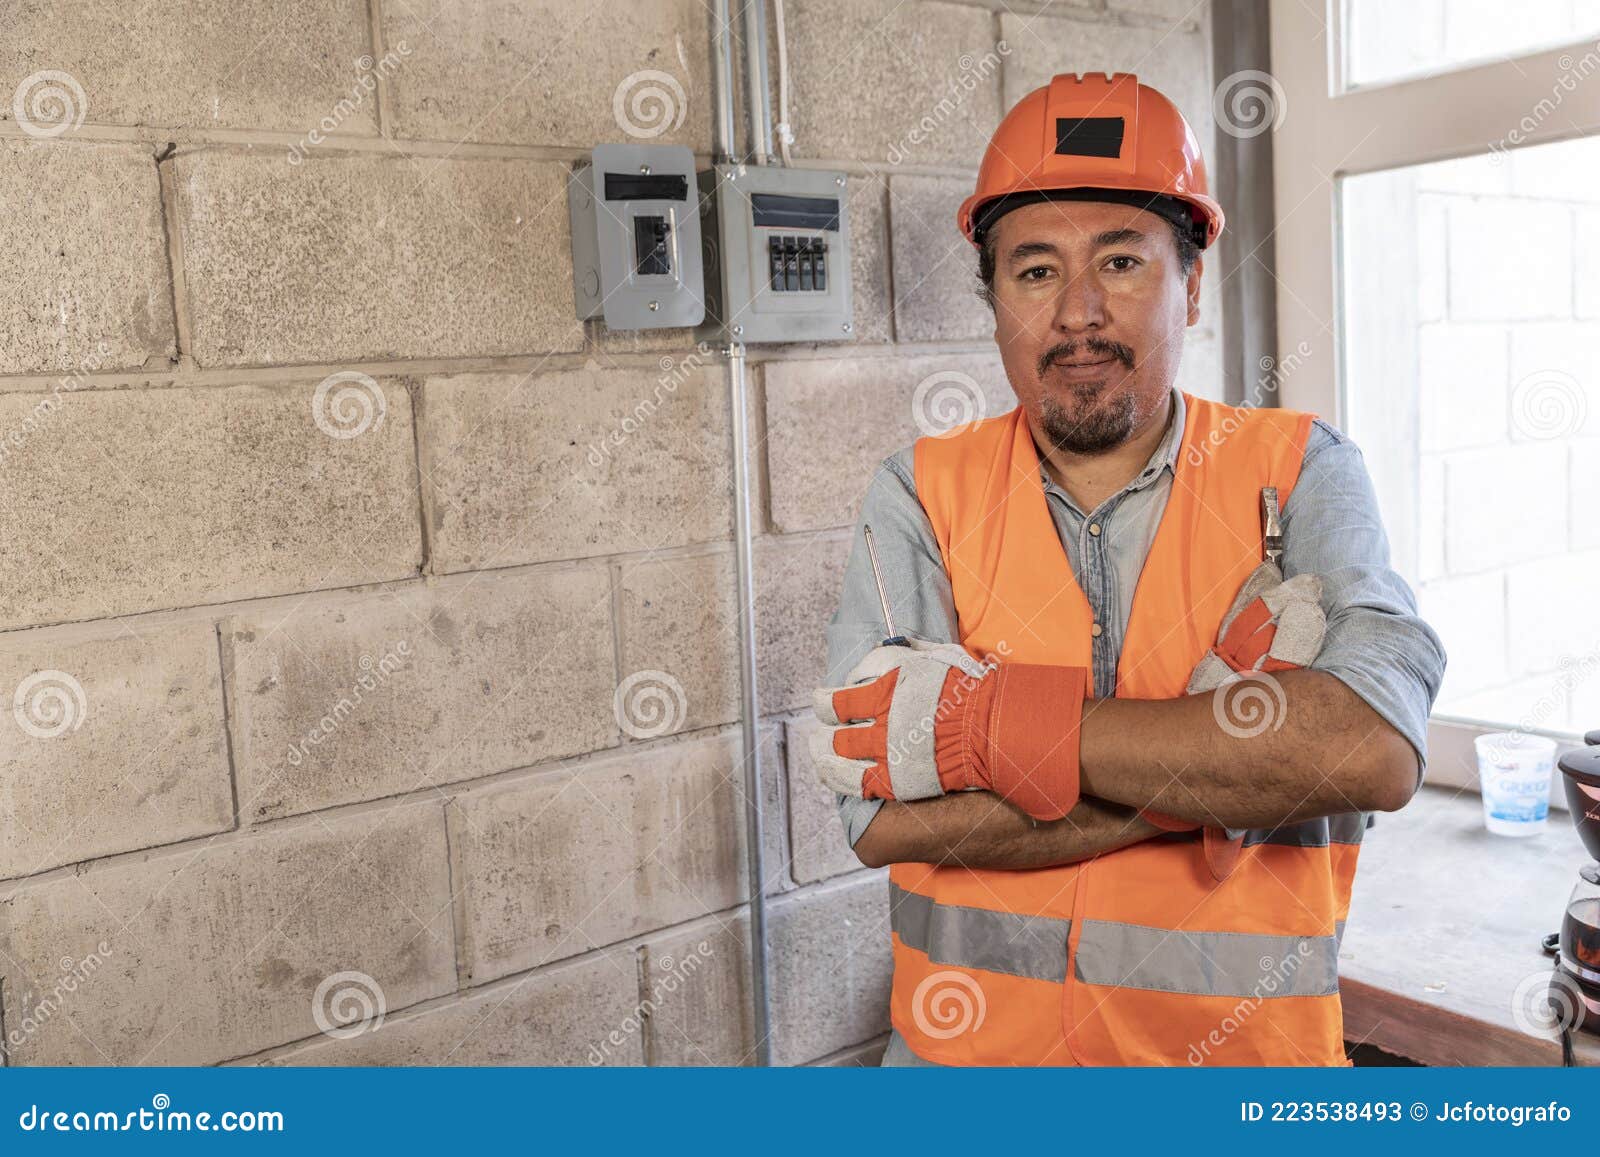 portrait of male electrician in a factory